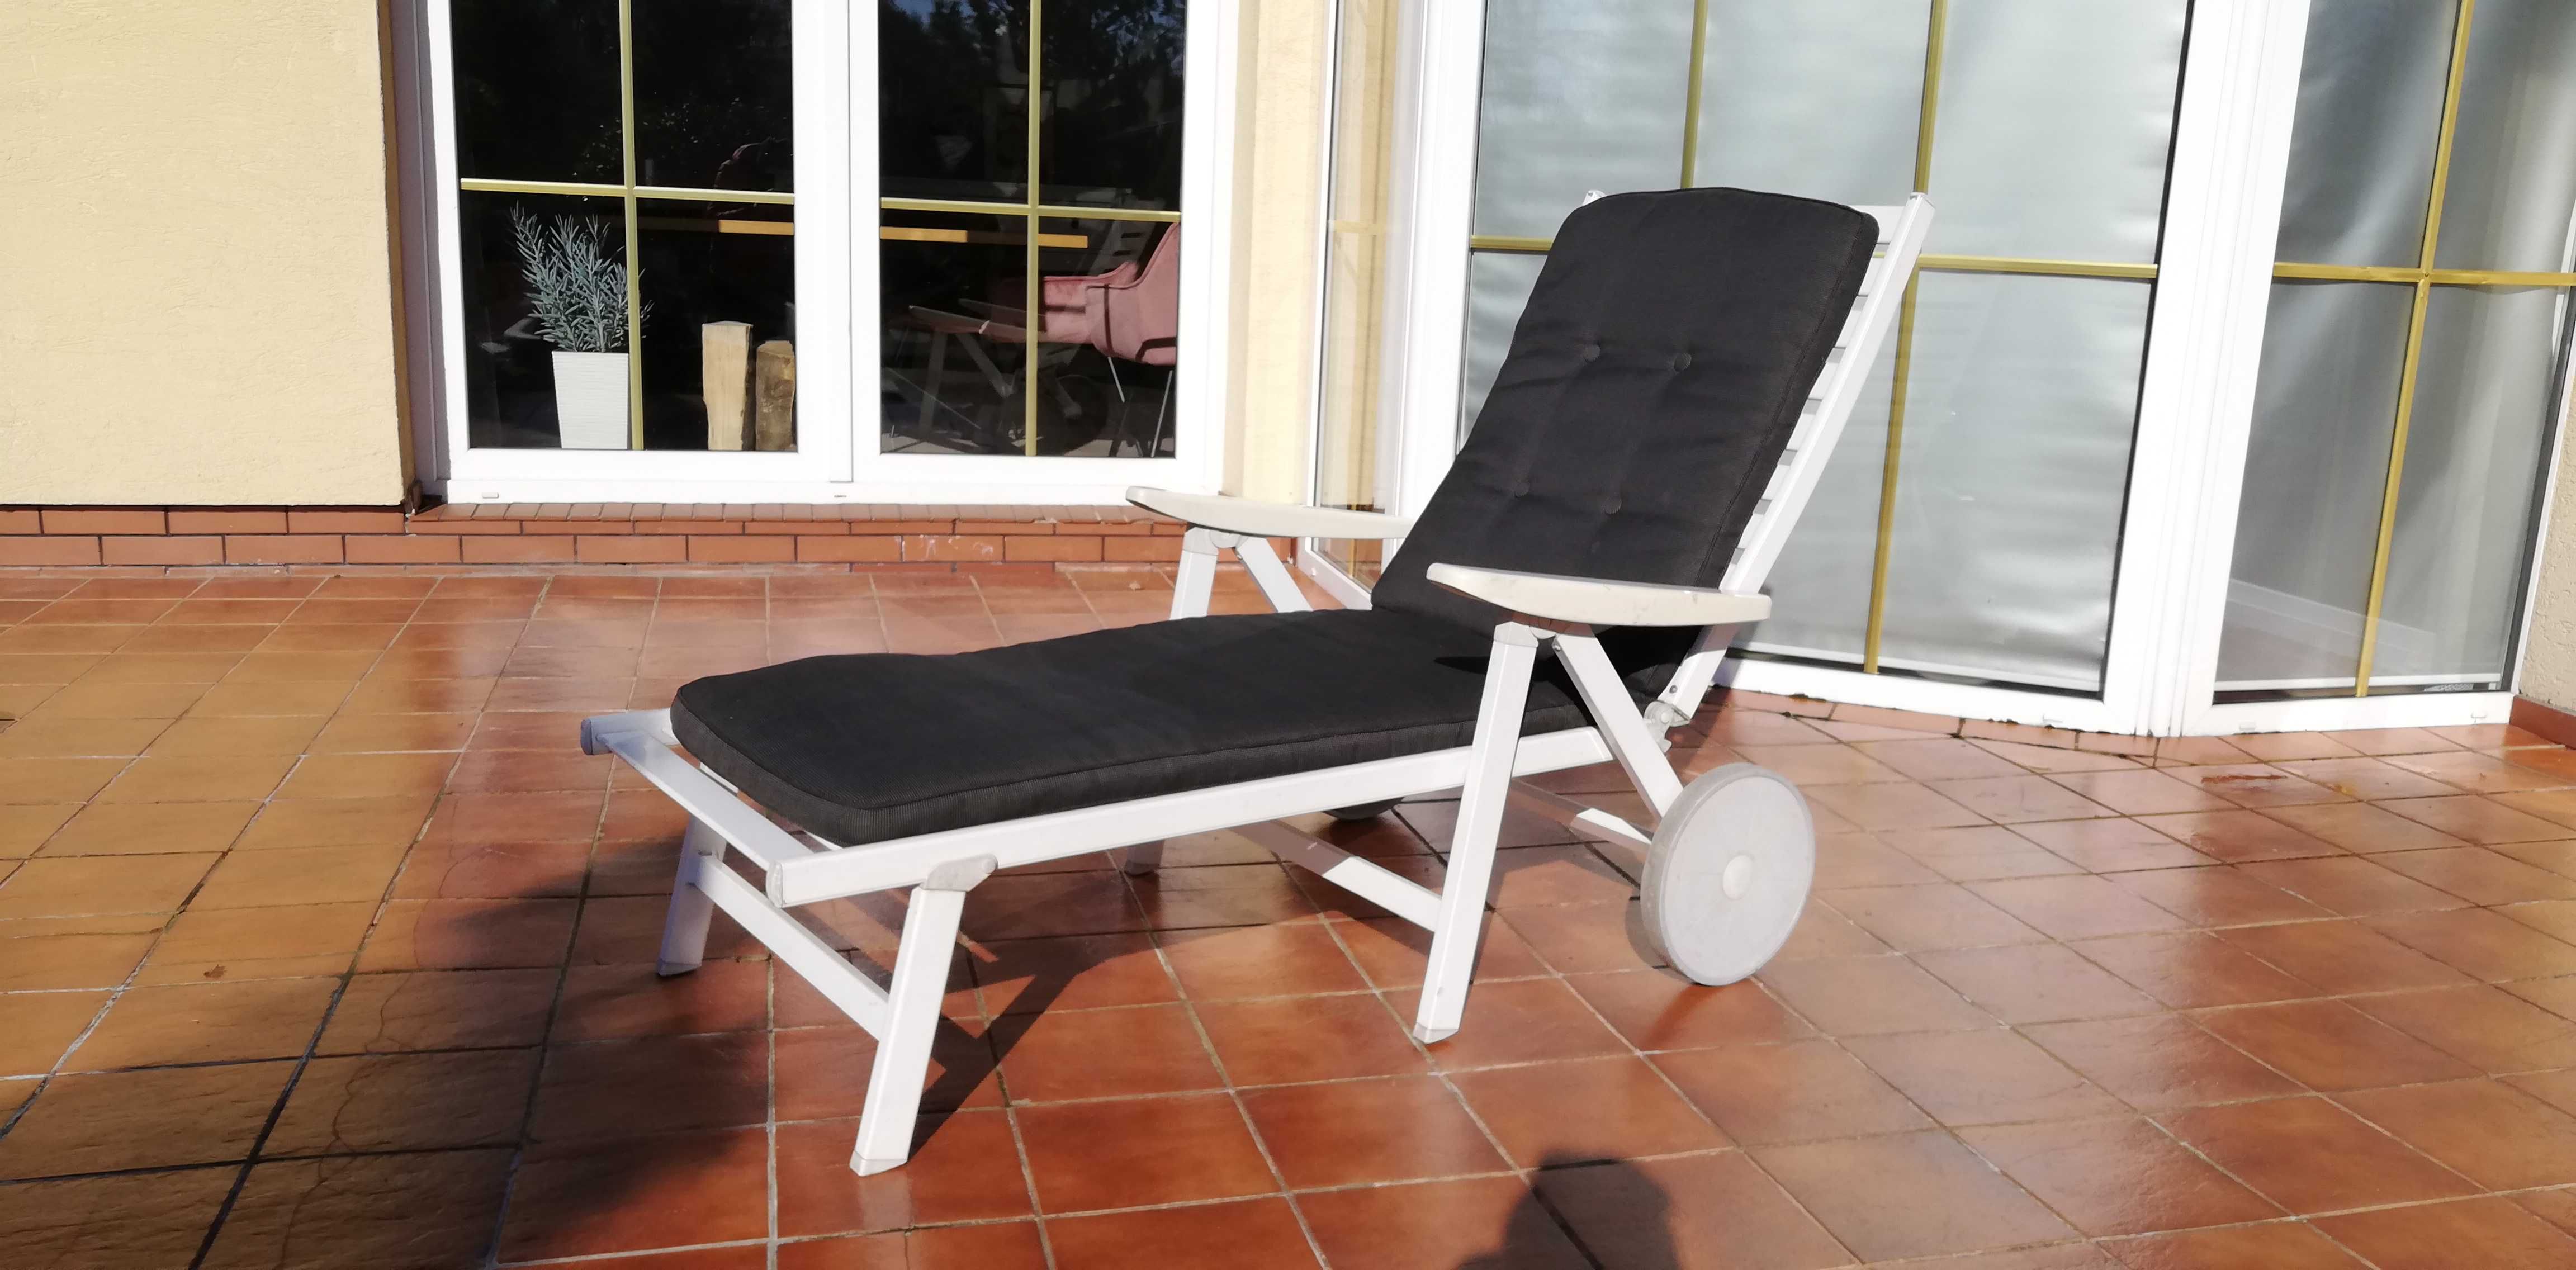 leżak ogrodowe łózko basen rozkładan solidne krzesło fotel meble ogród